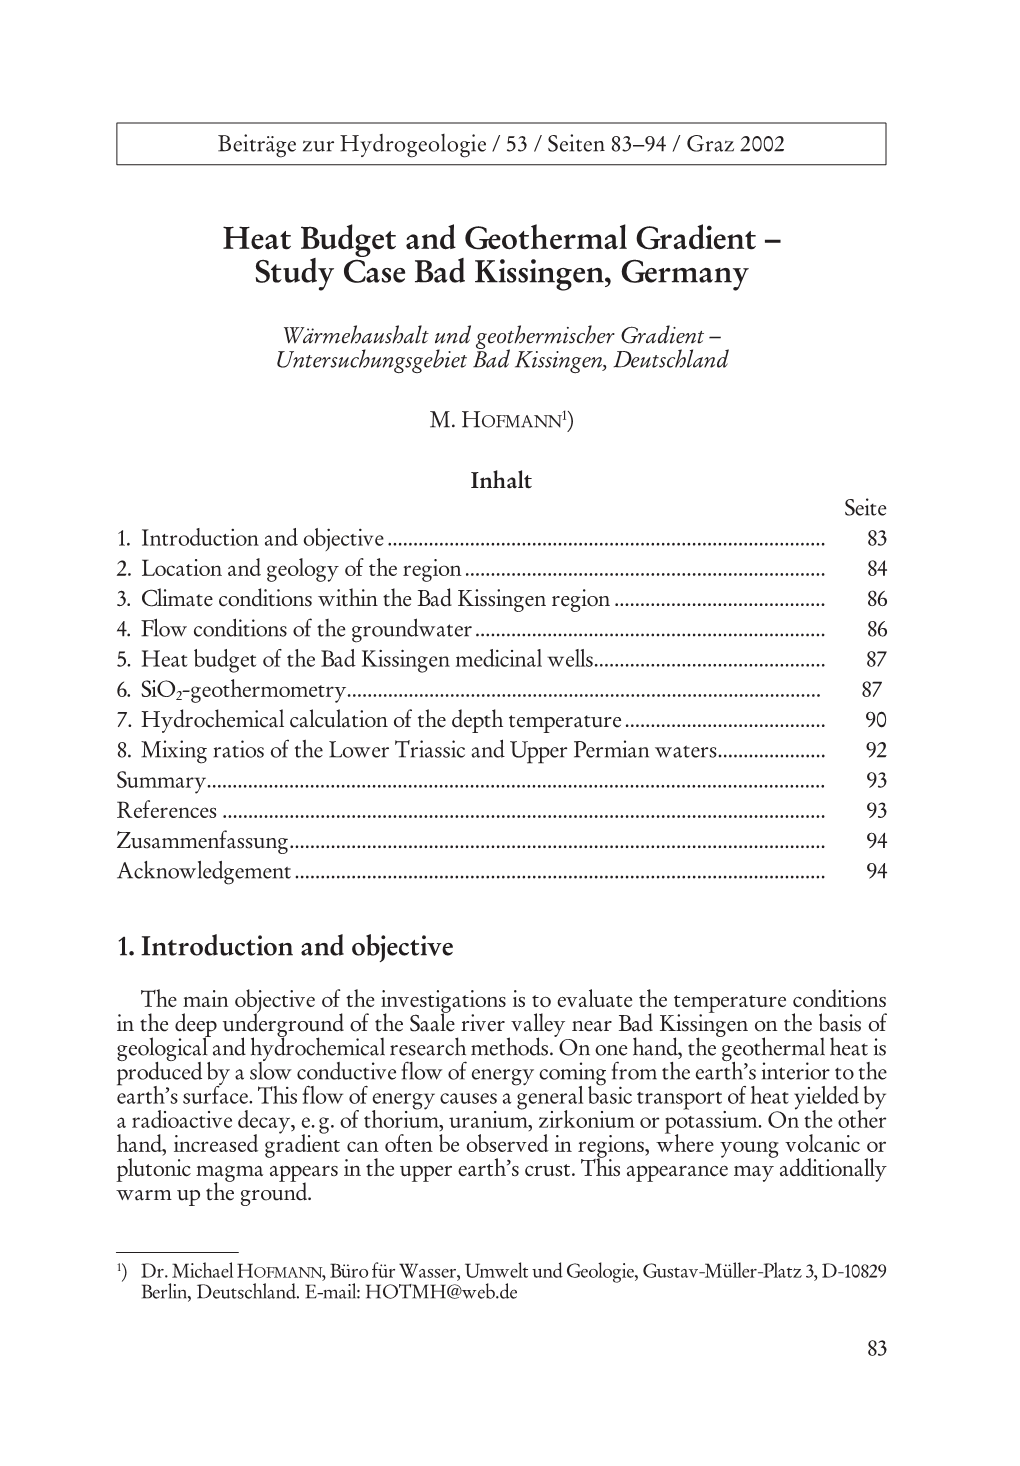 Study Case Bad Kissingen, Germany